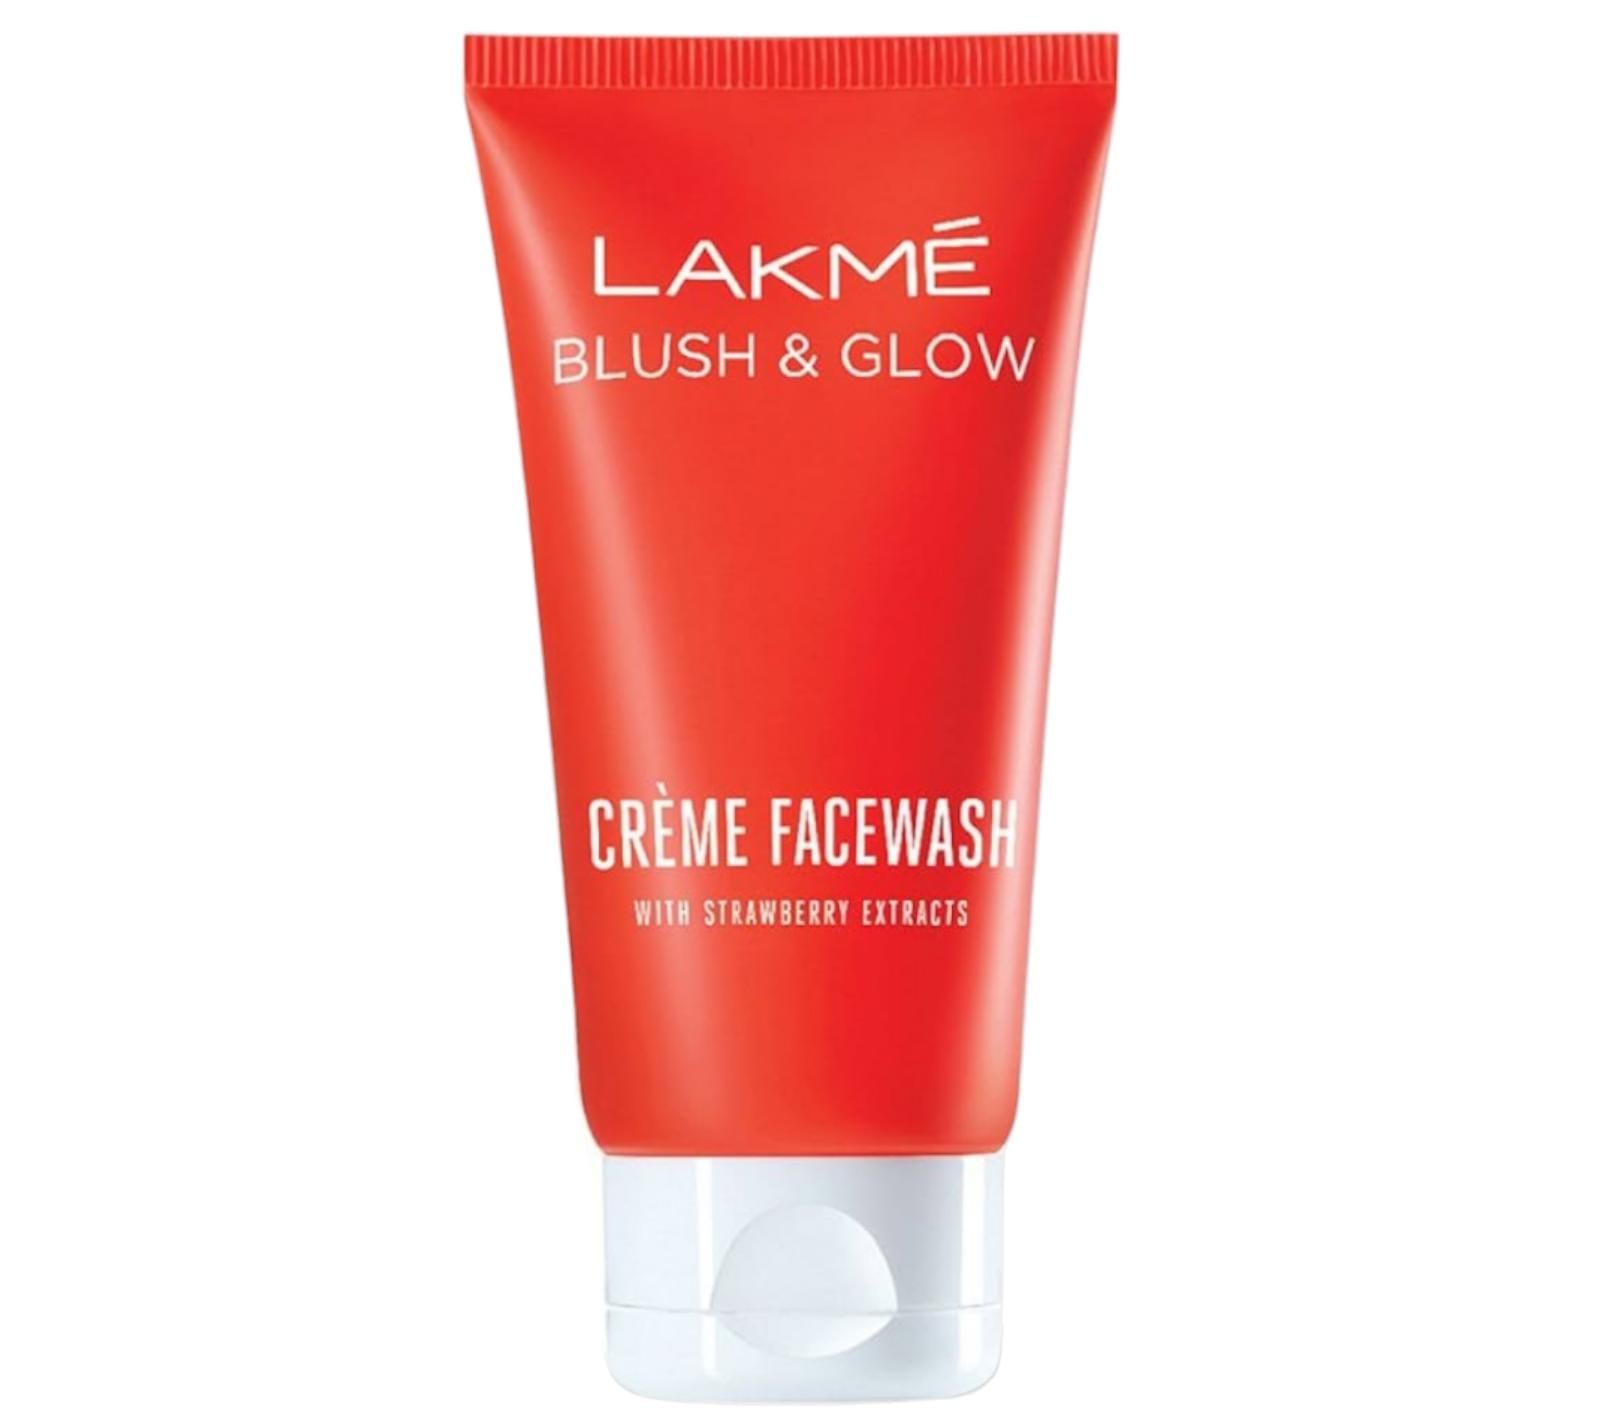 Lakme Creme Face wash